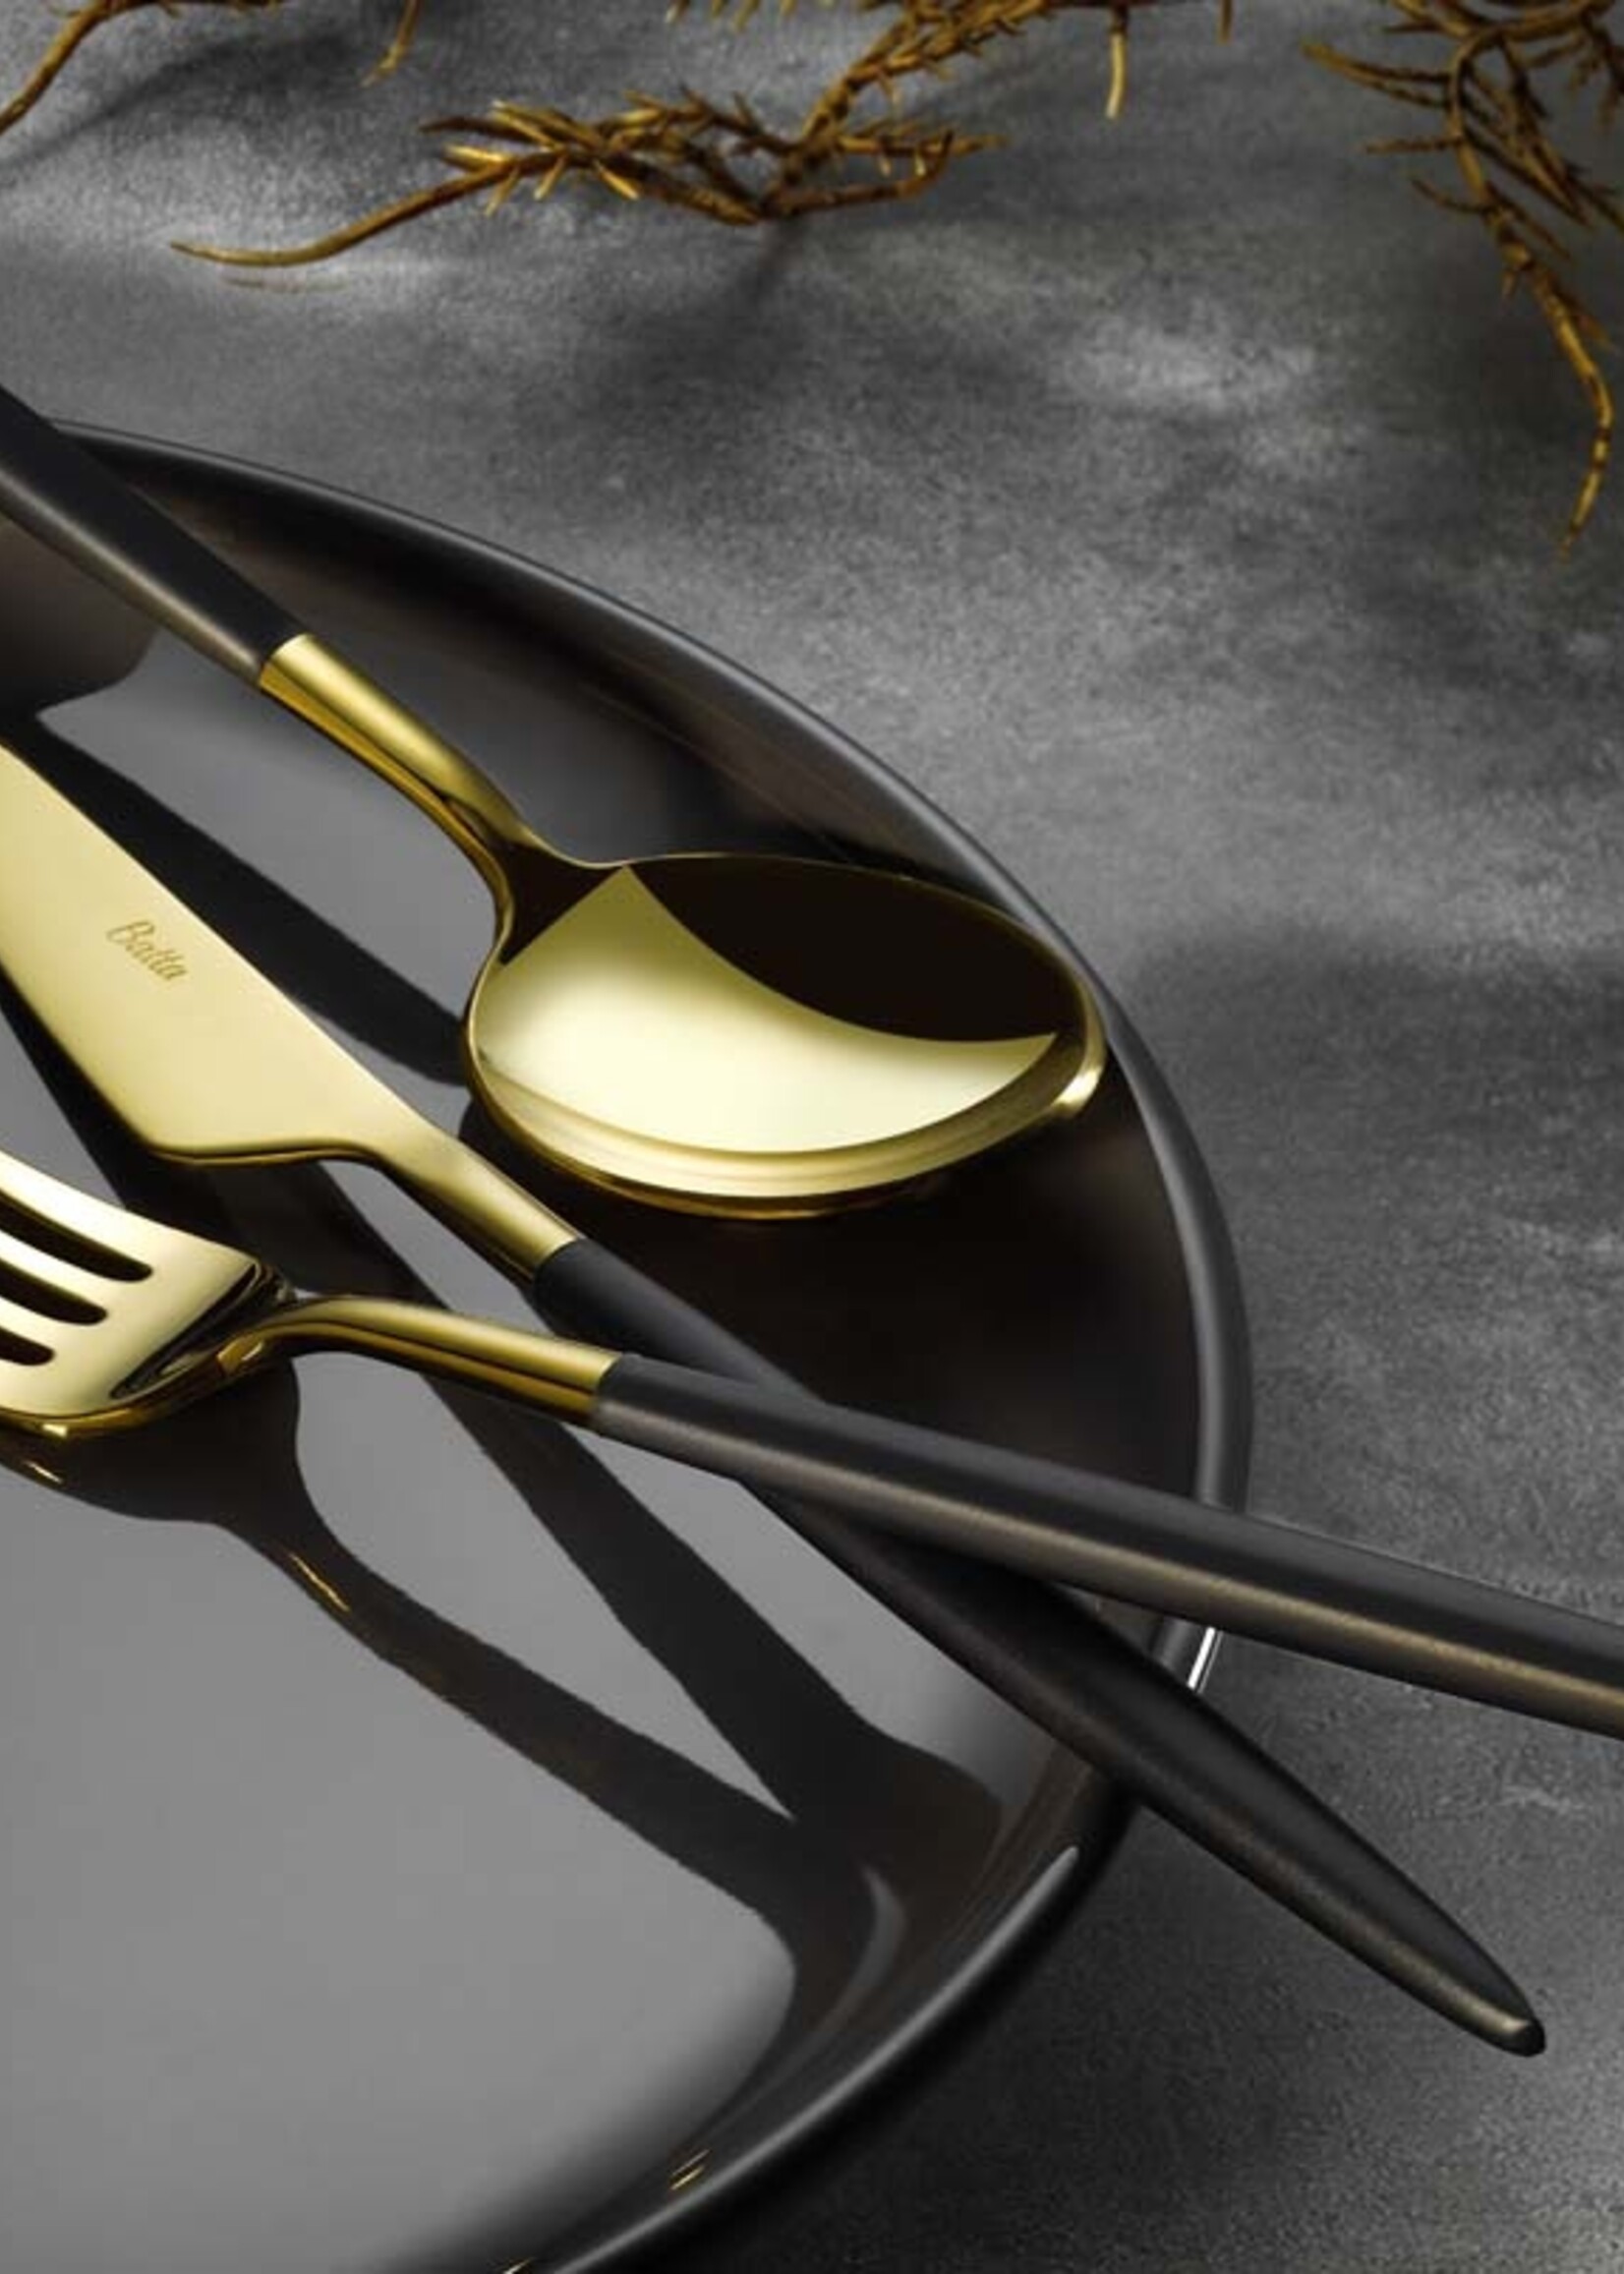 Batta Table Knife - Stainless Steel – Washabi Black Gold - Batta